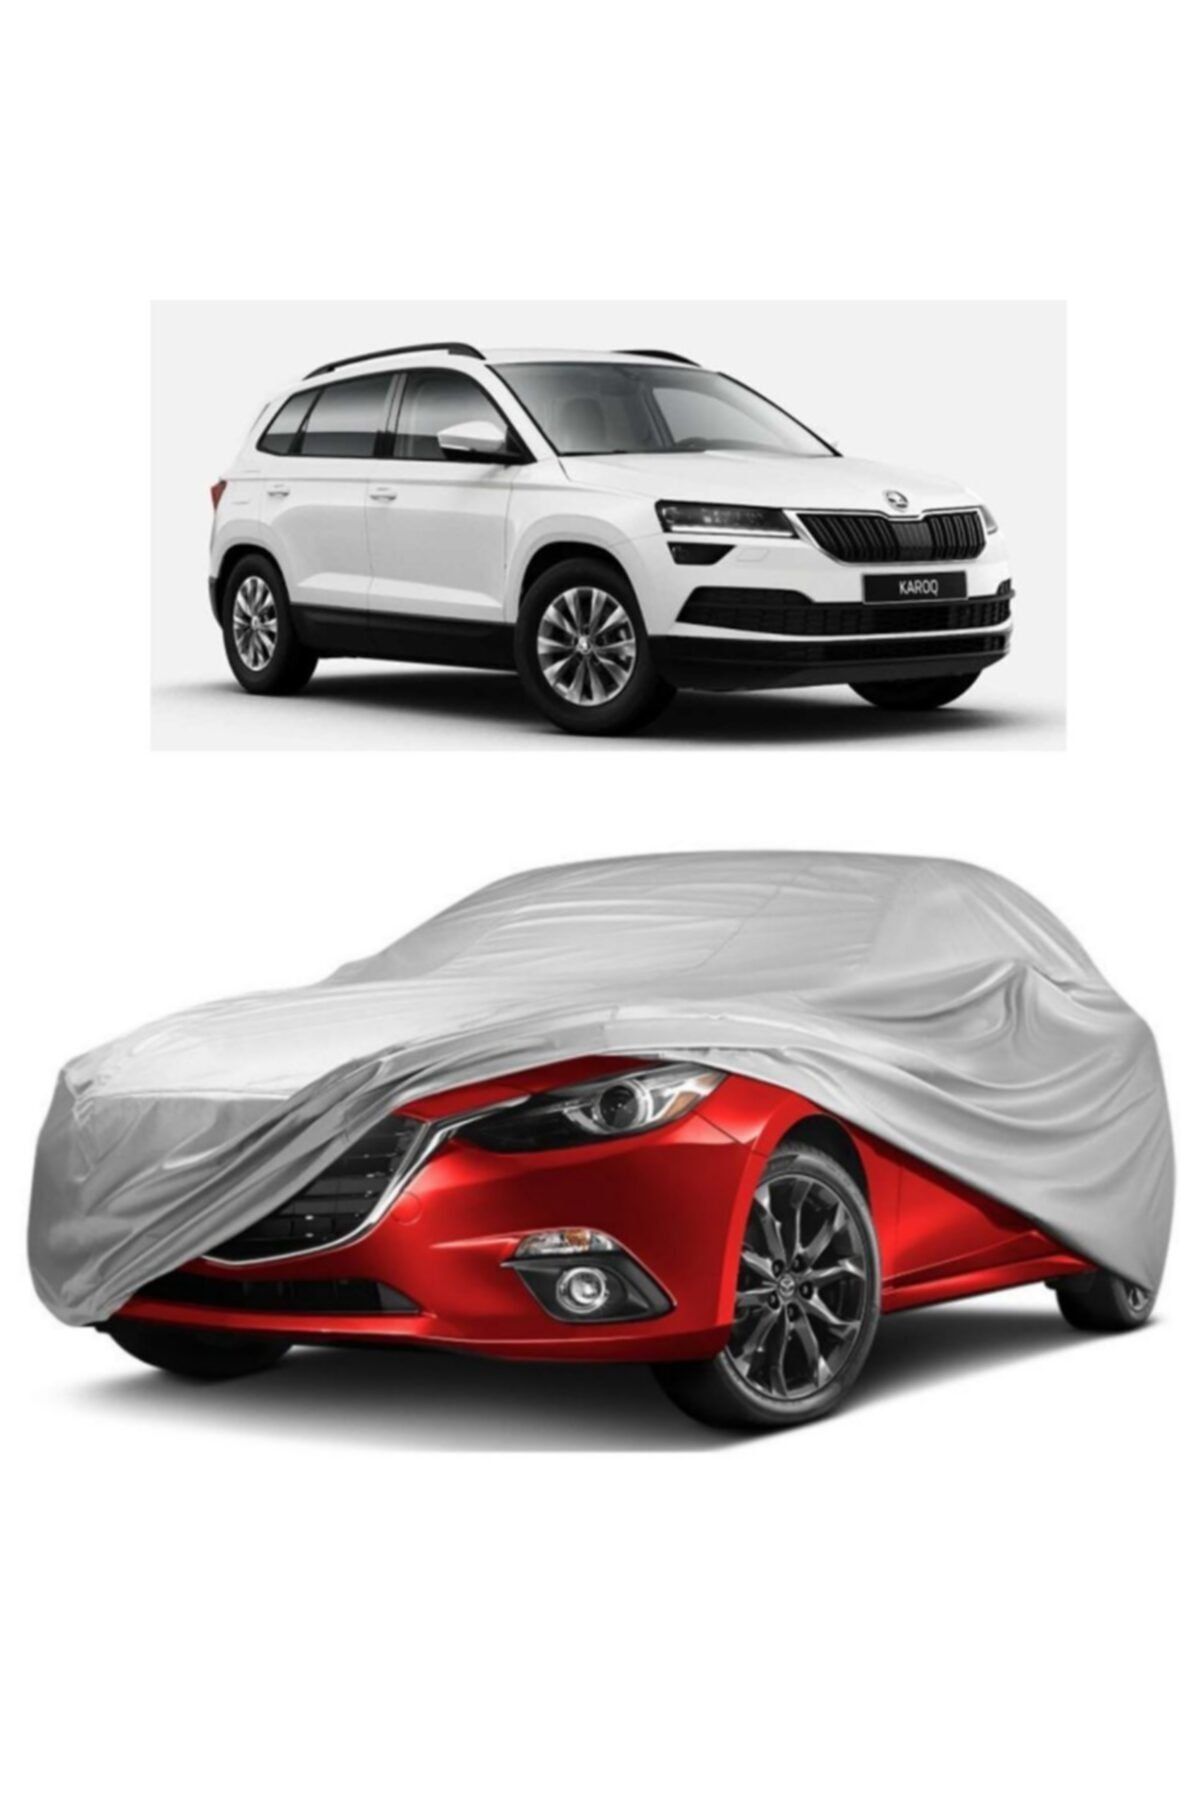 CoverPlus Skoda Karoq Car Tarpaulin Miflon Canvas Auto Tent Cover